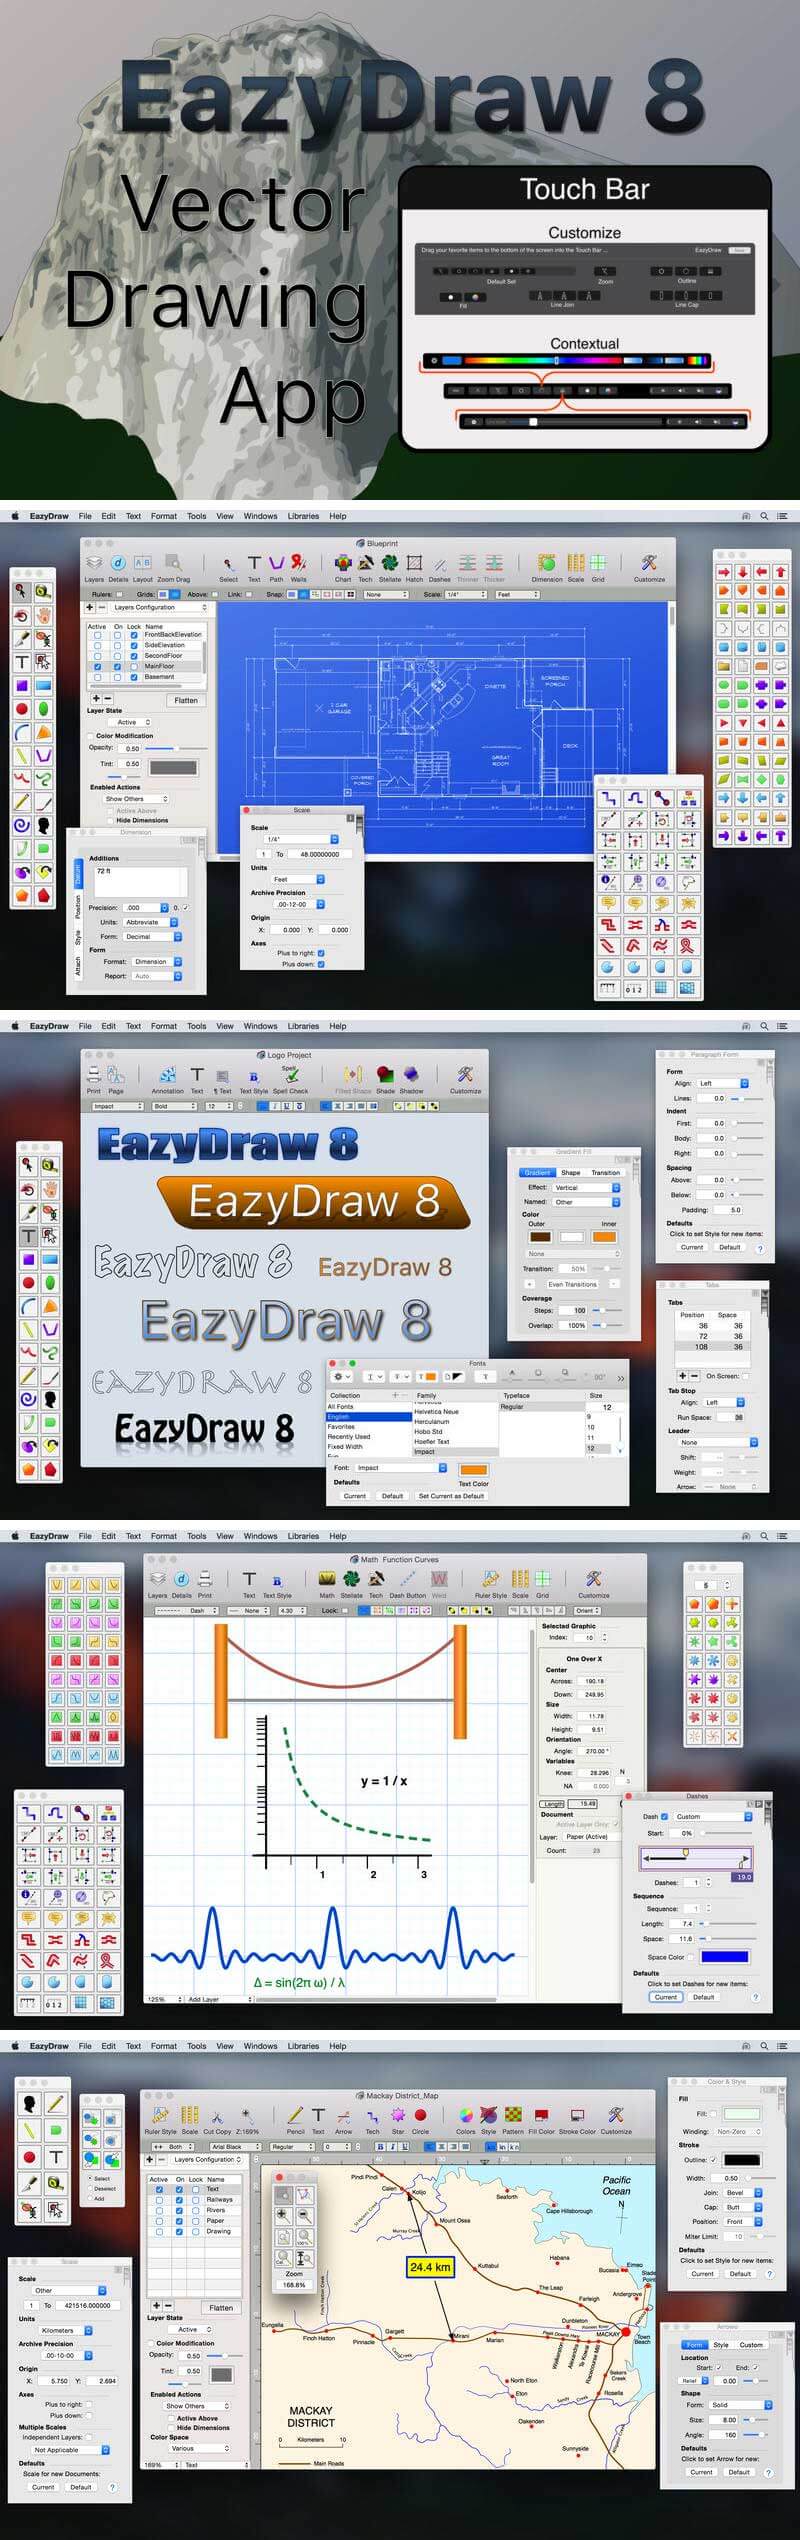 eazydraw 8.5 2 wont start on mac os 10.14